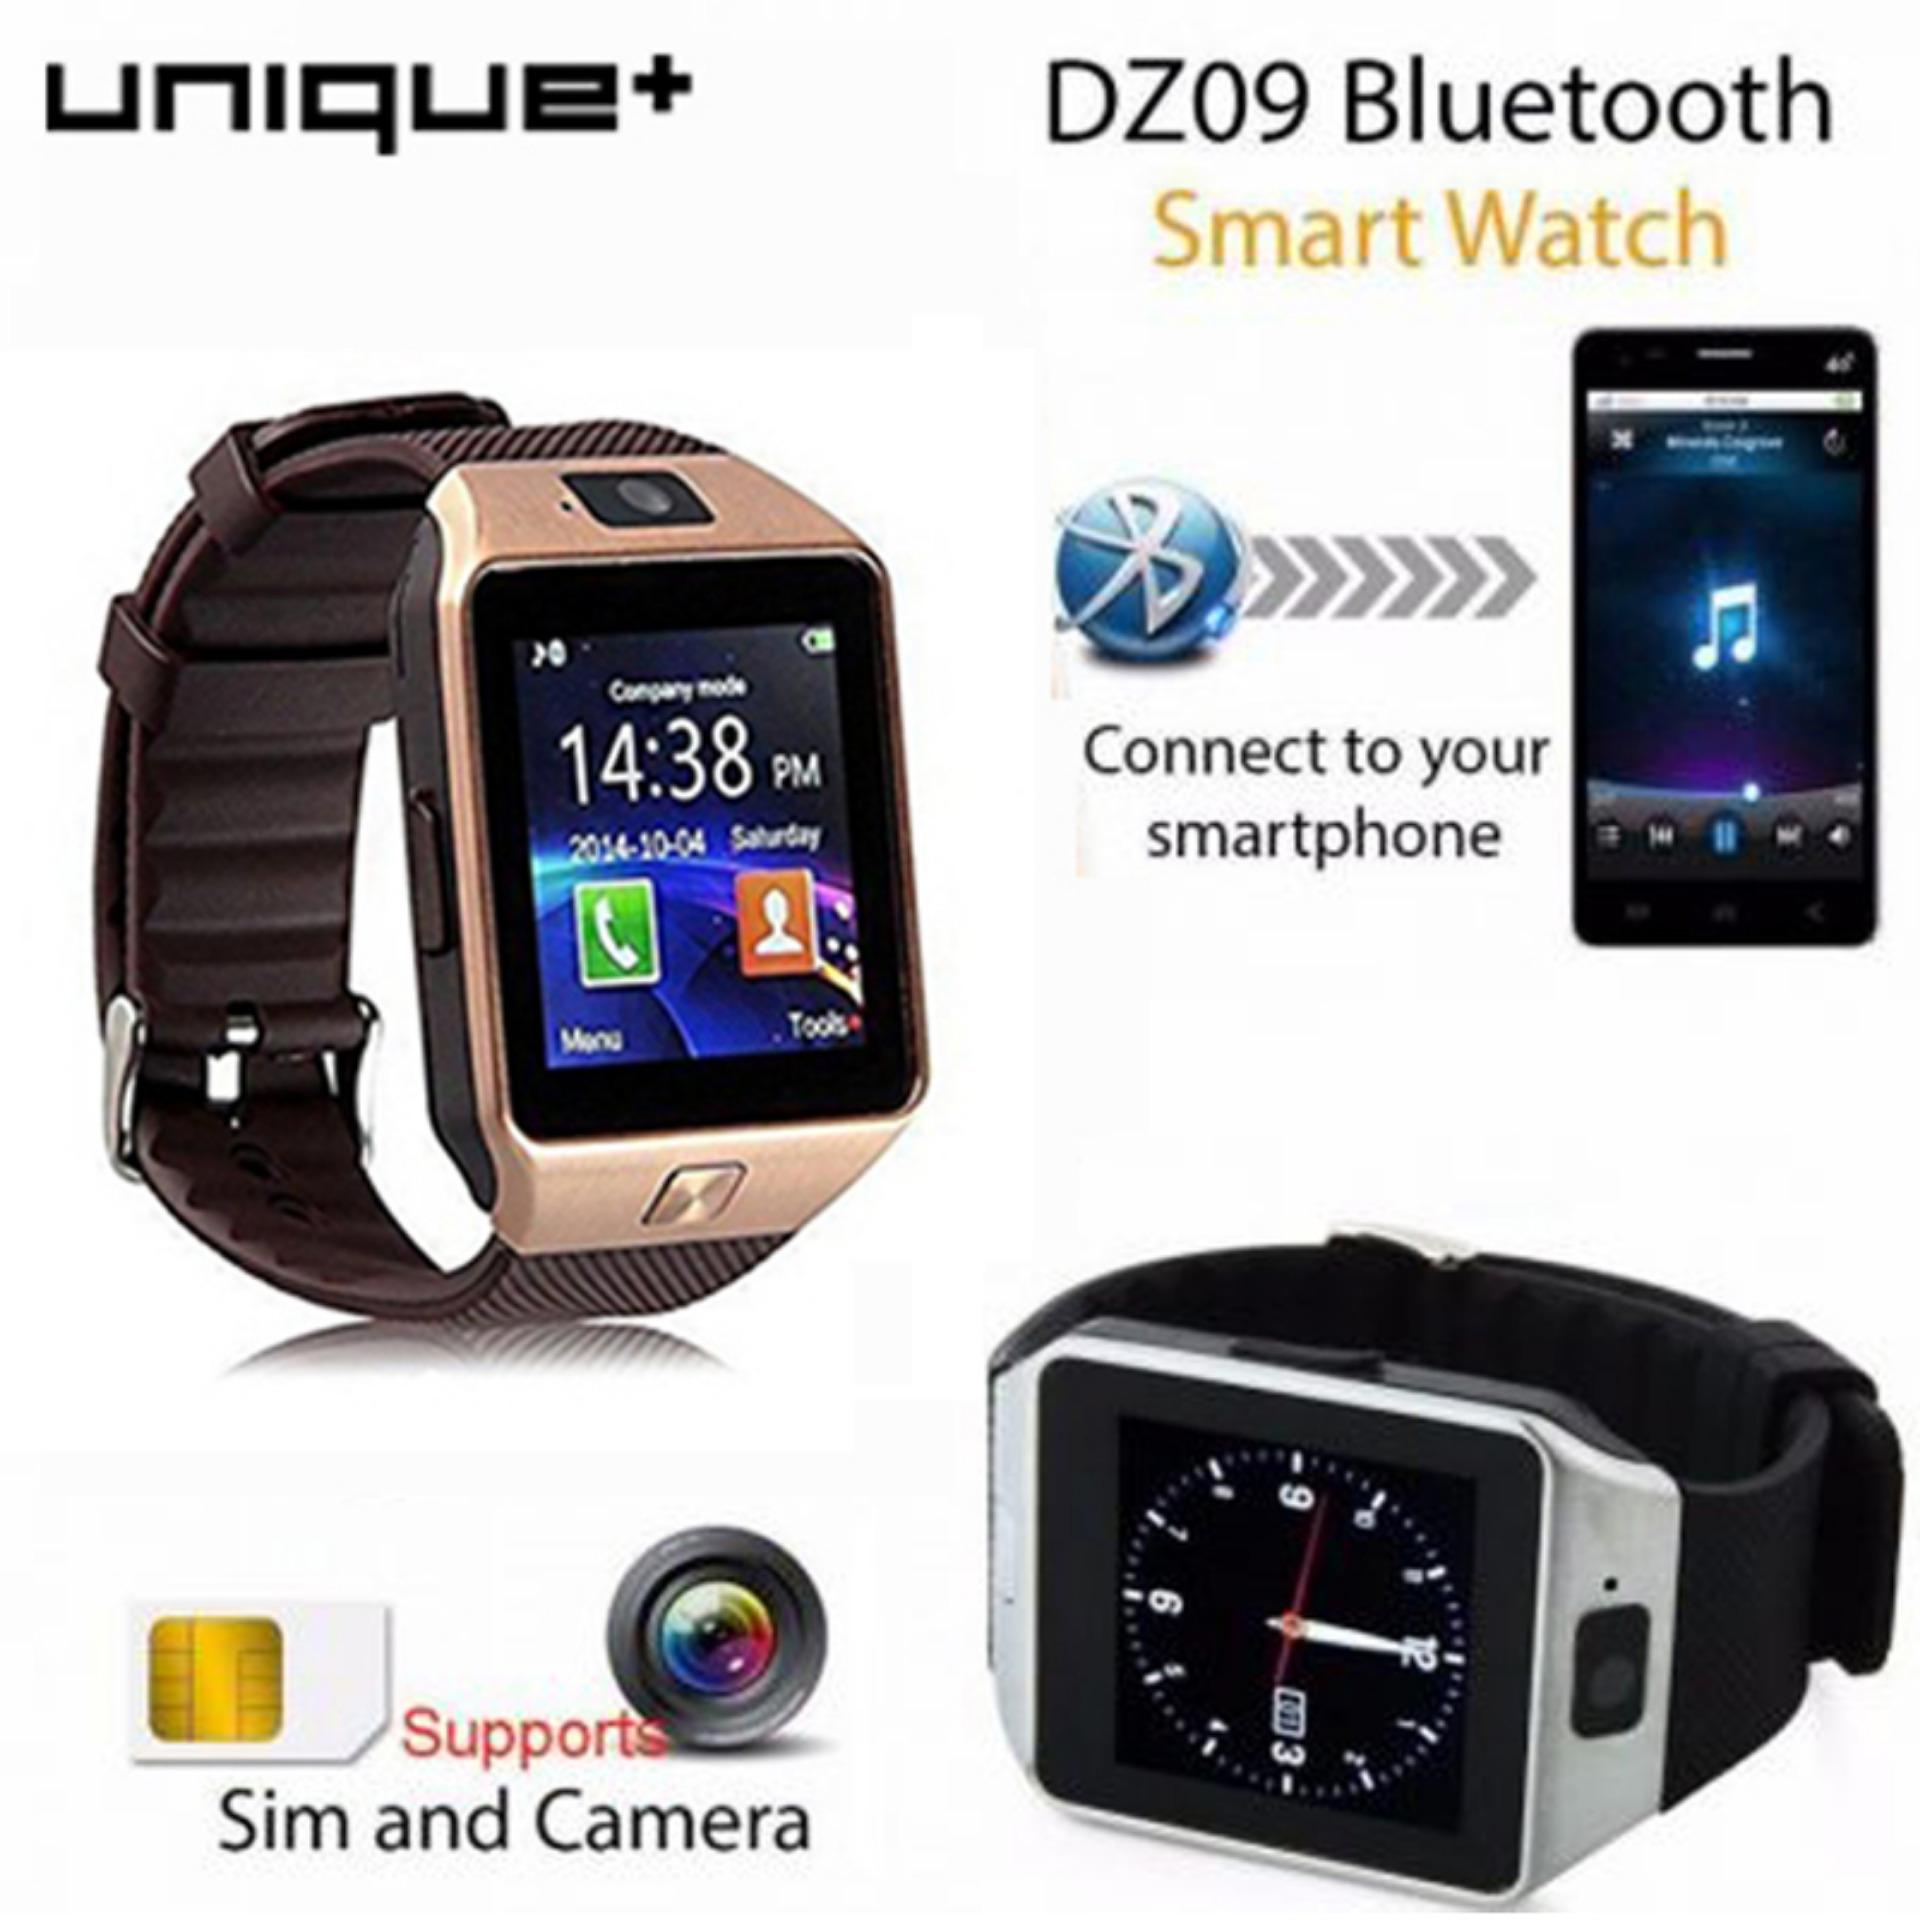 Unique Smartwatch U9 DZ09 - Smart Watch Support Apple Iphone Android Phone